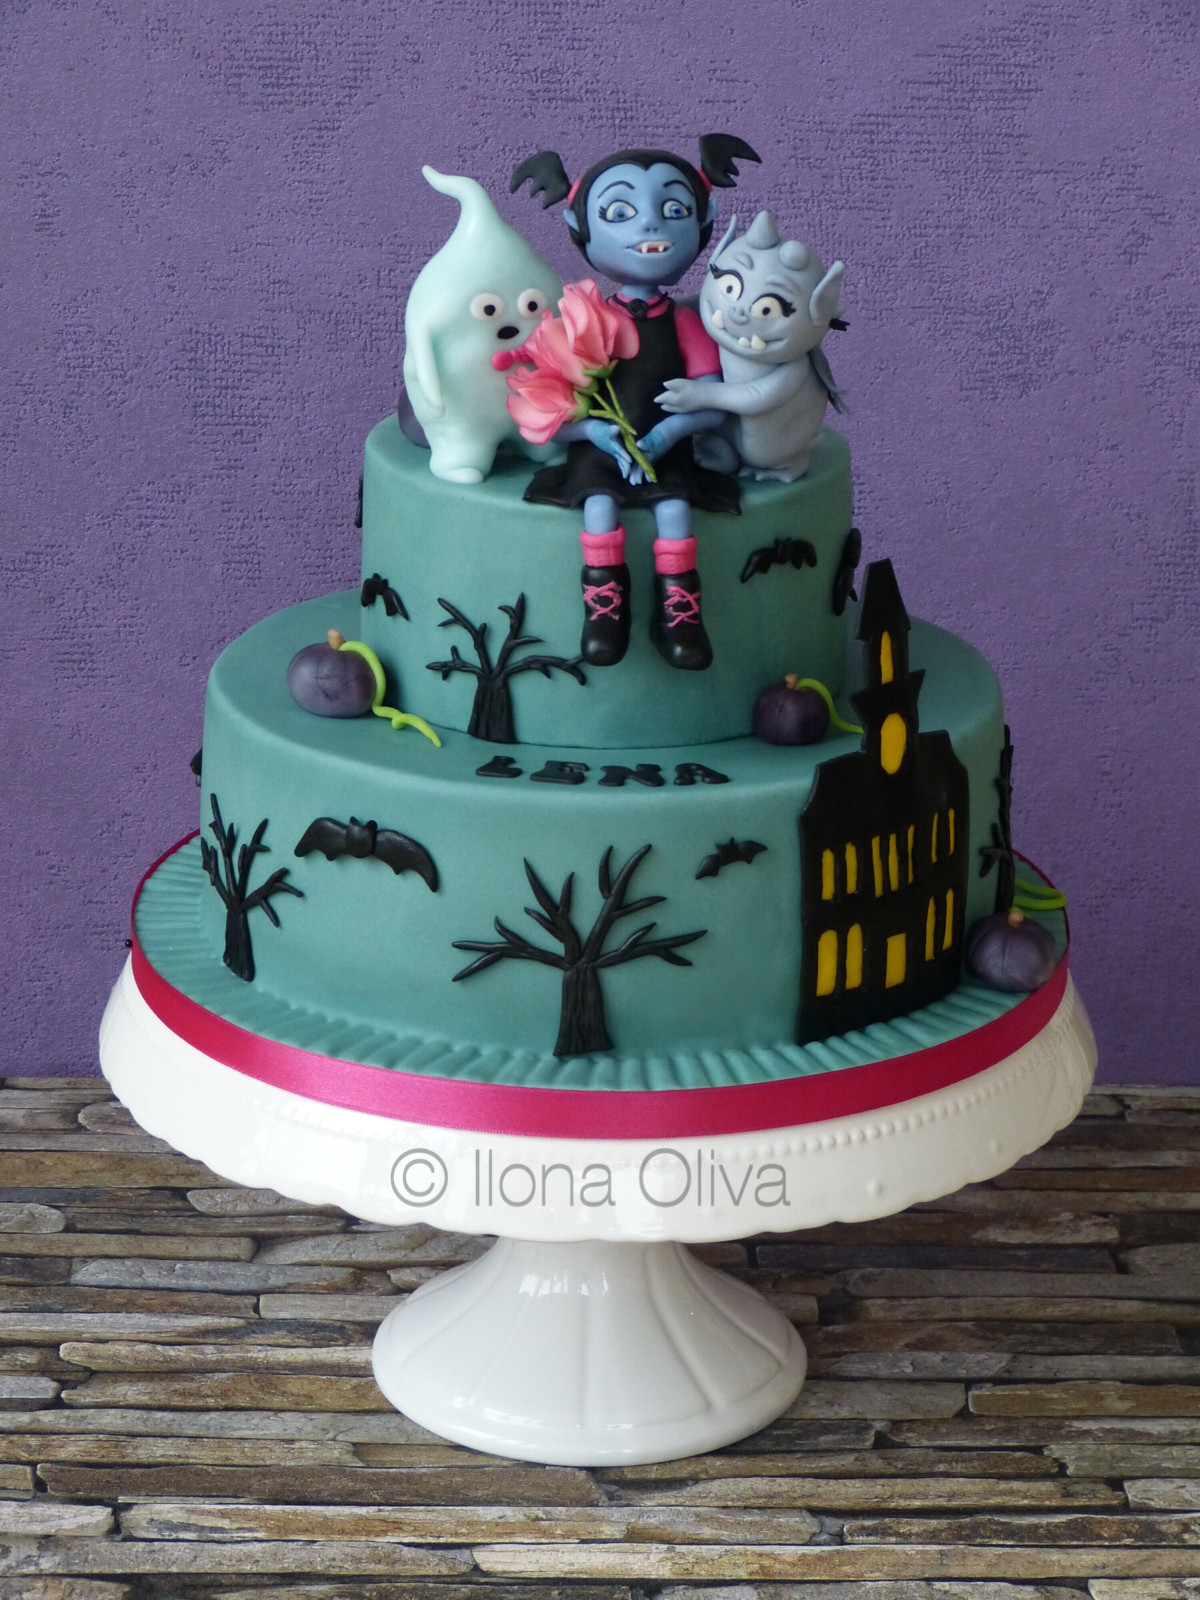 Best ideas about Vampirina Birthday Decorations
. Save or Pin Vampirina Cake Cake Decorating Now.